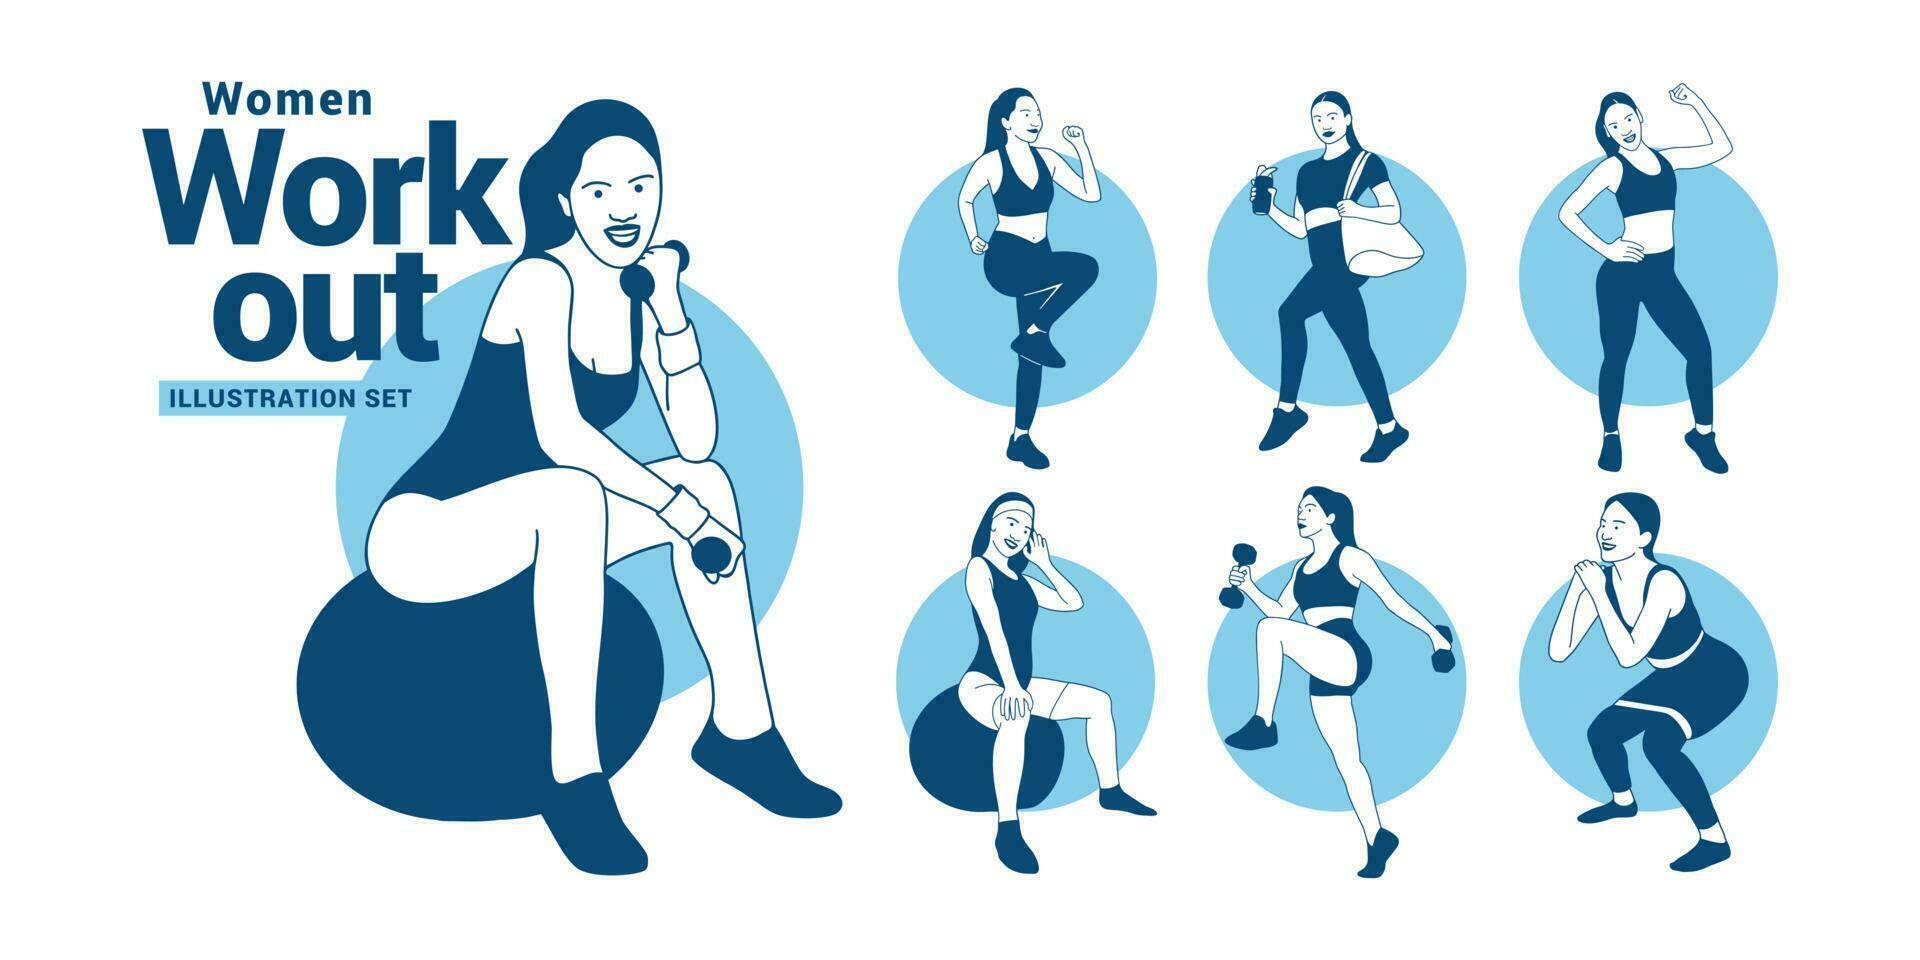 Women Workout doing fitness and yoga exercisesIllustration Set vector